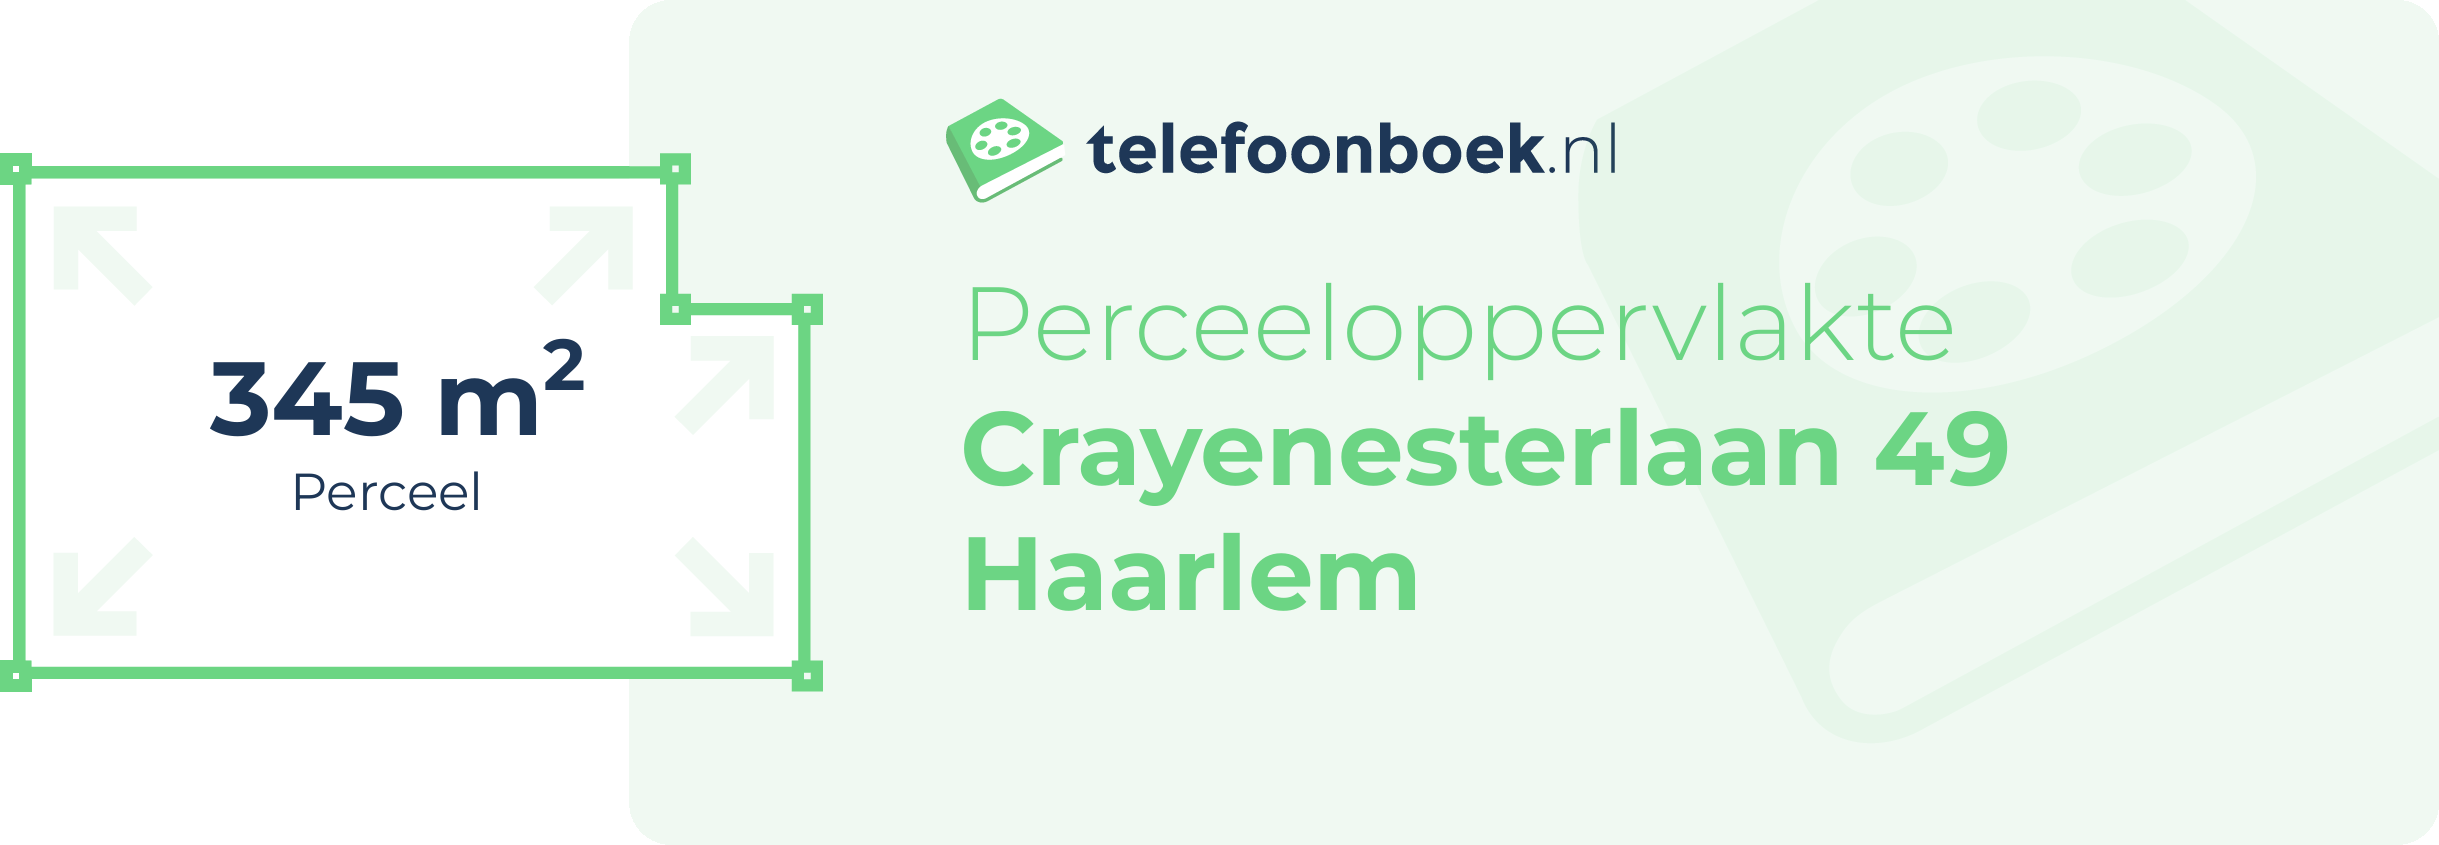 Perceeloppervlakte Crayenesterlaan 49 Haarlem